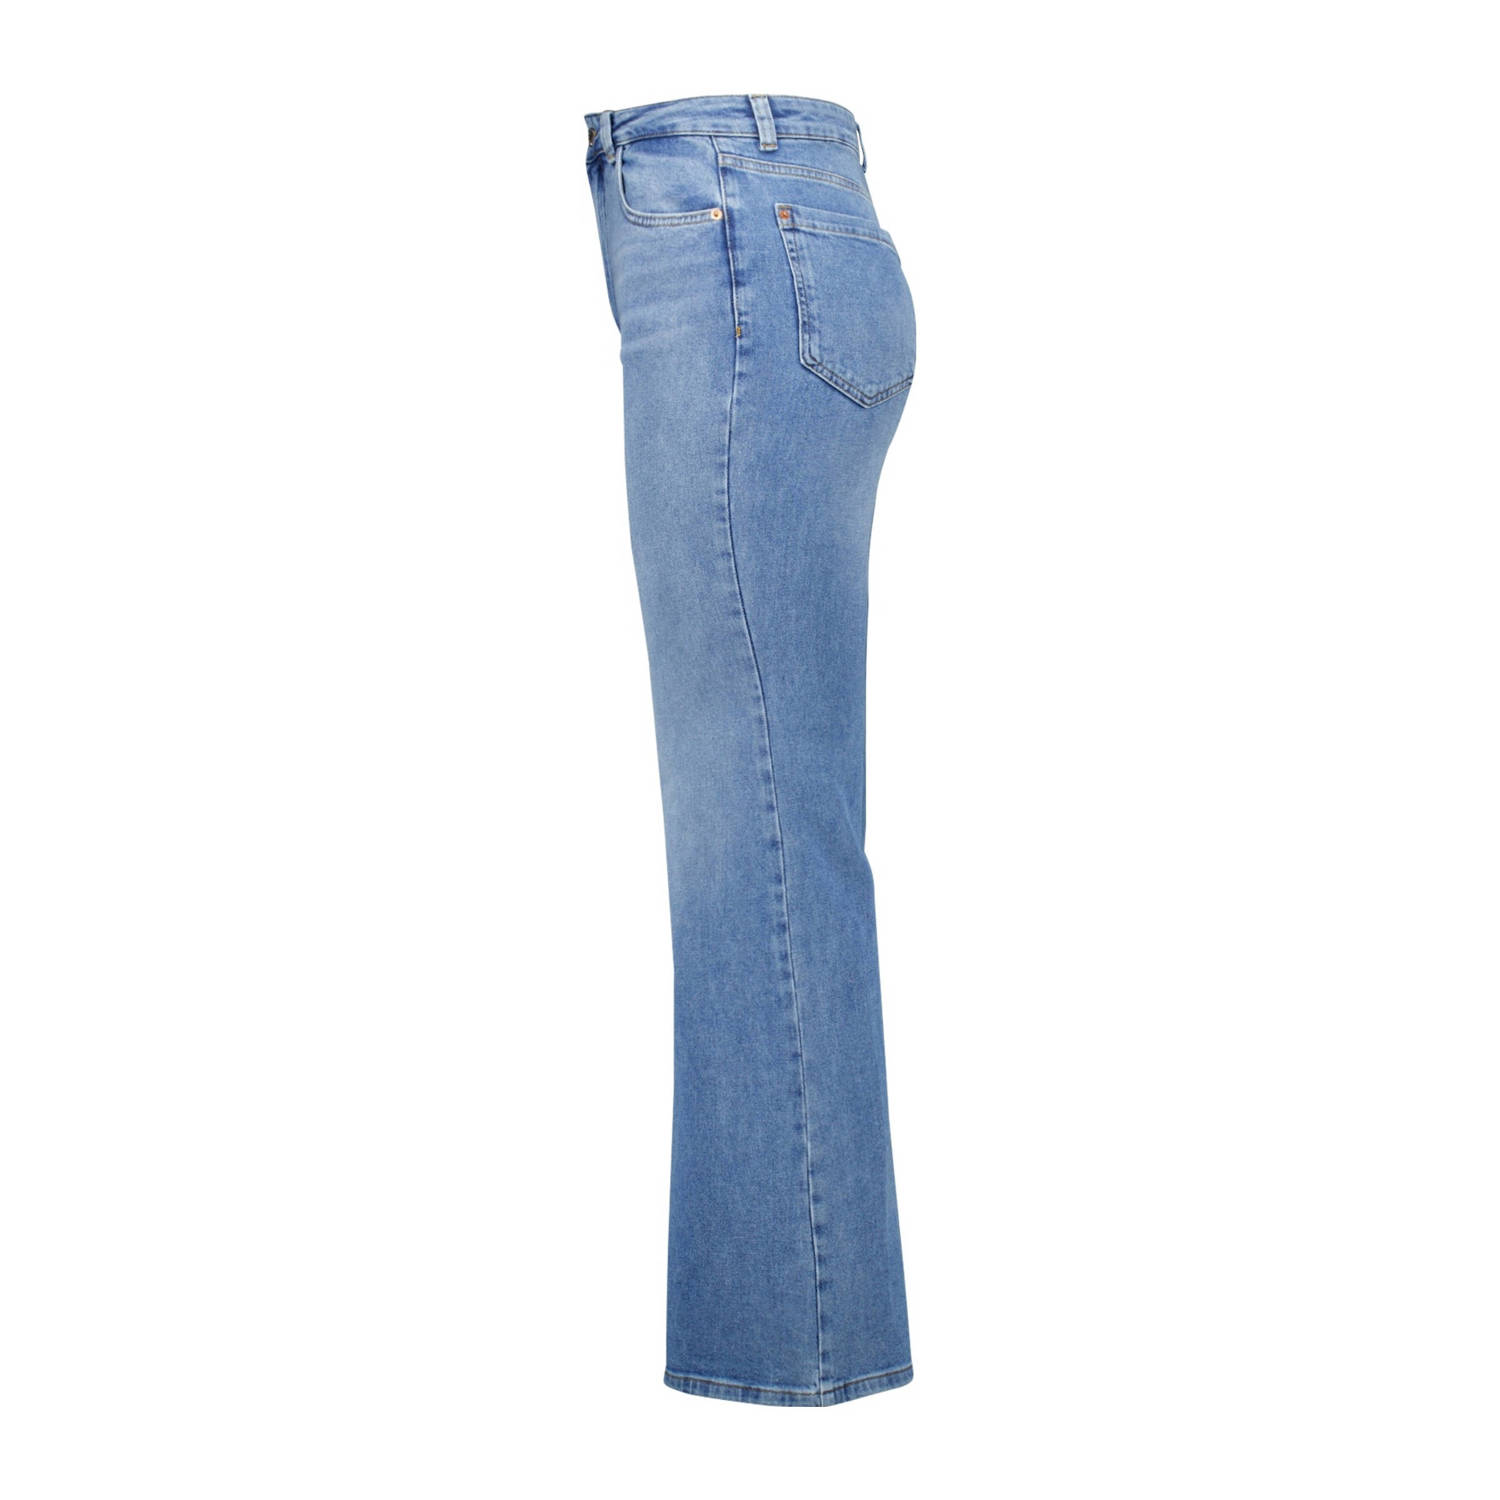 MS Mode high waist flared jeans stonewash light blue denim